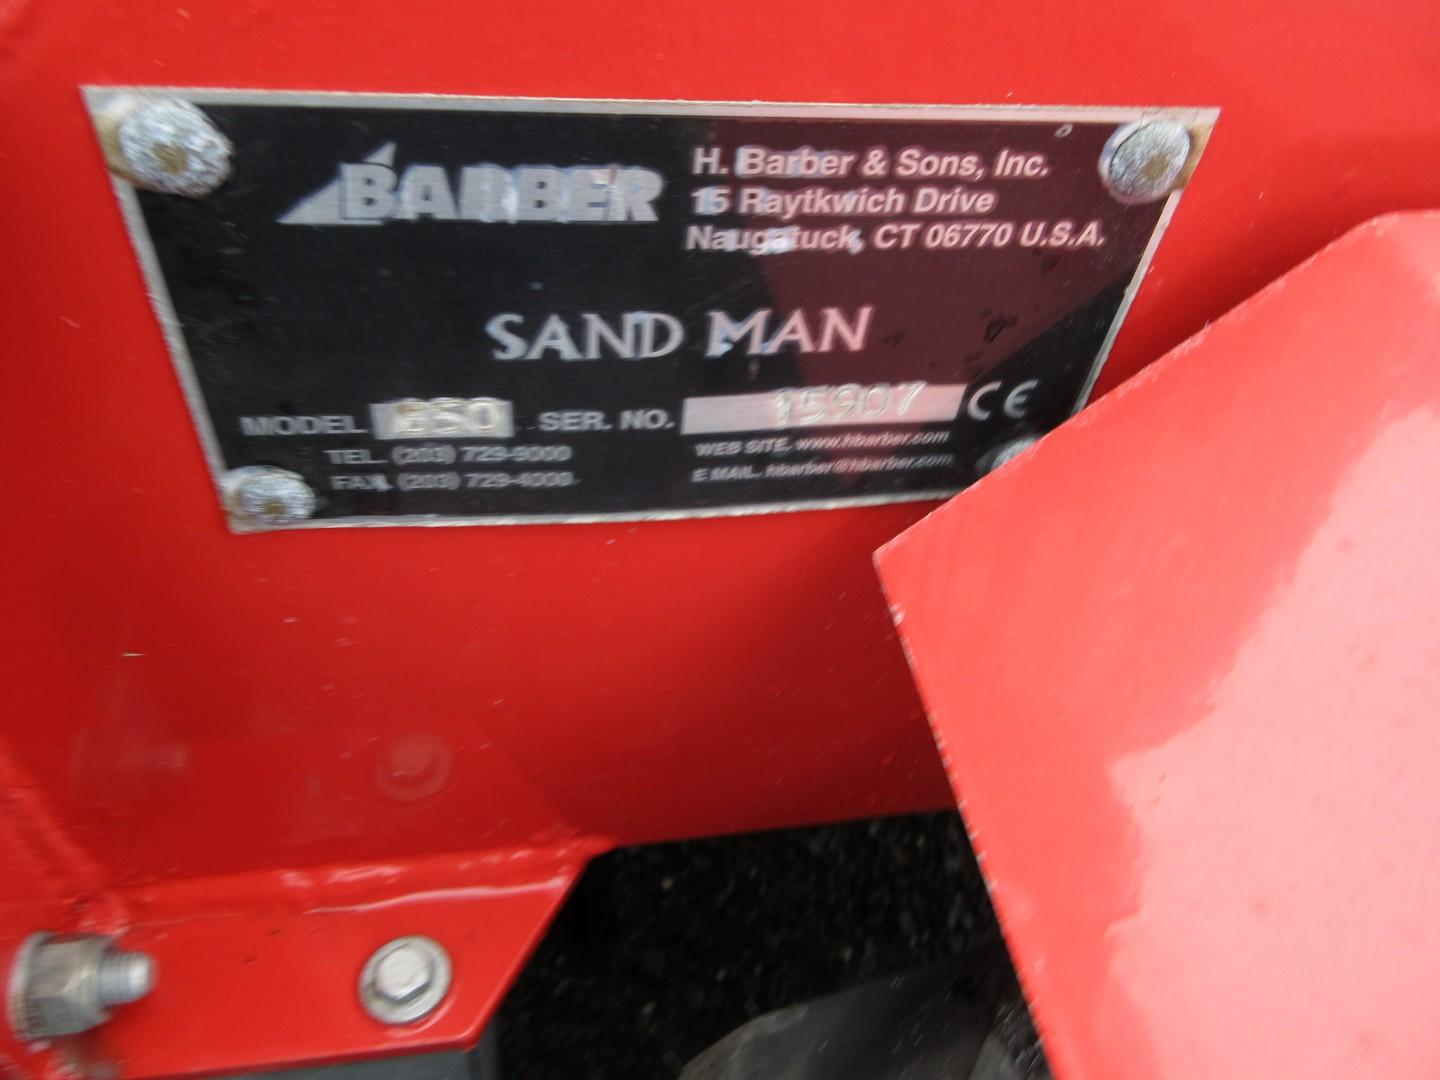 Sand Man Beach Comber